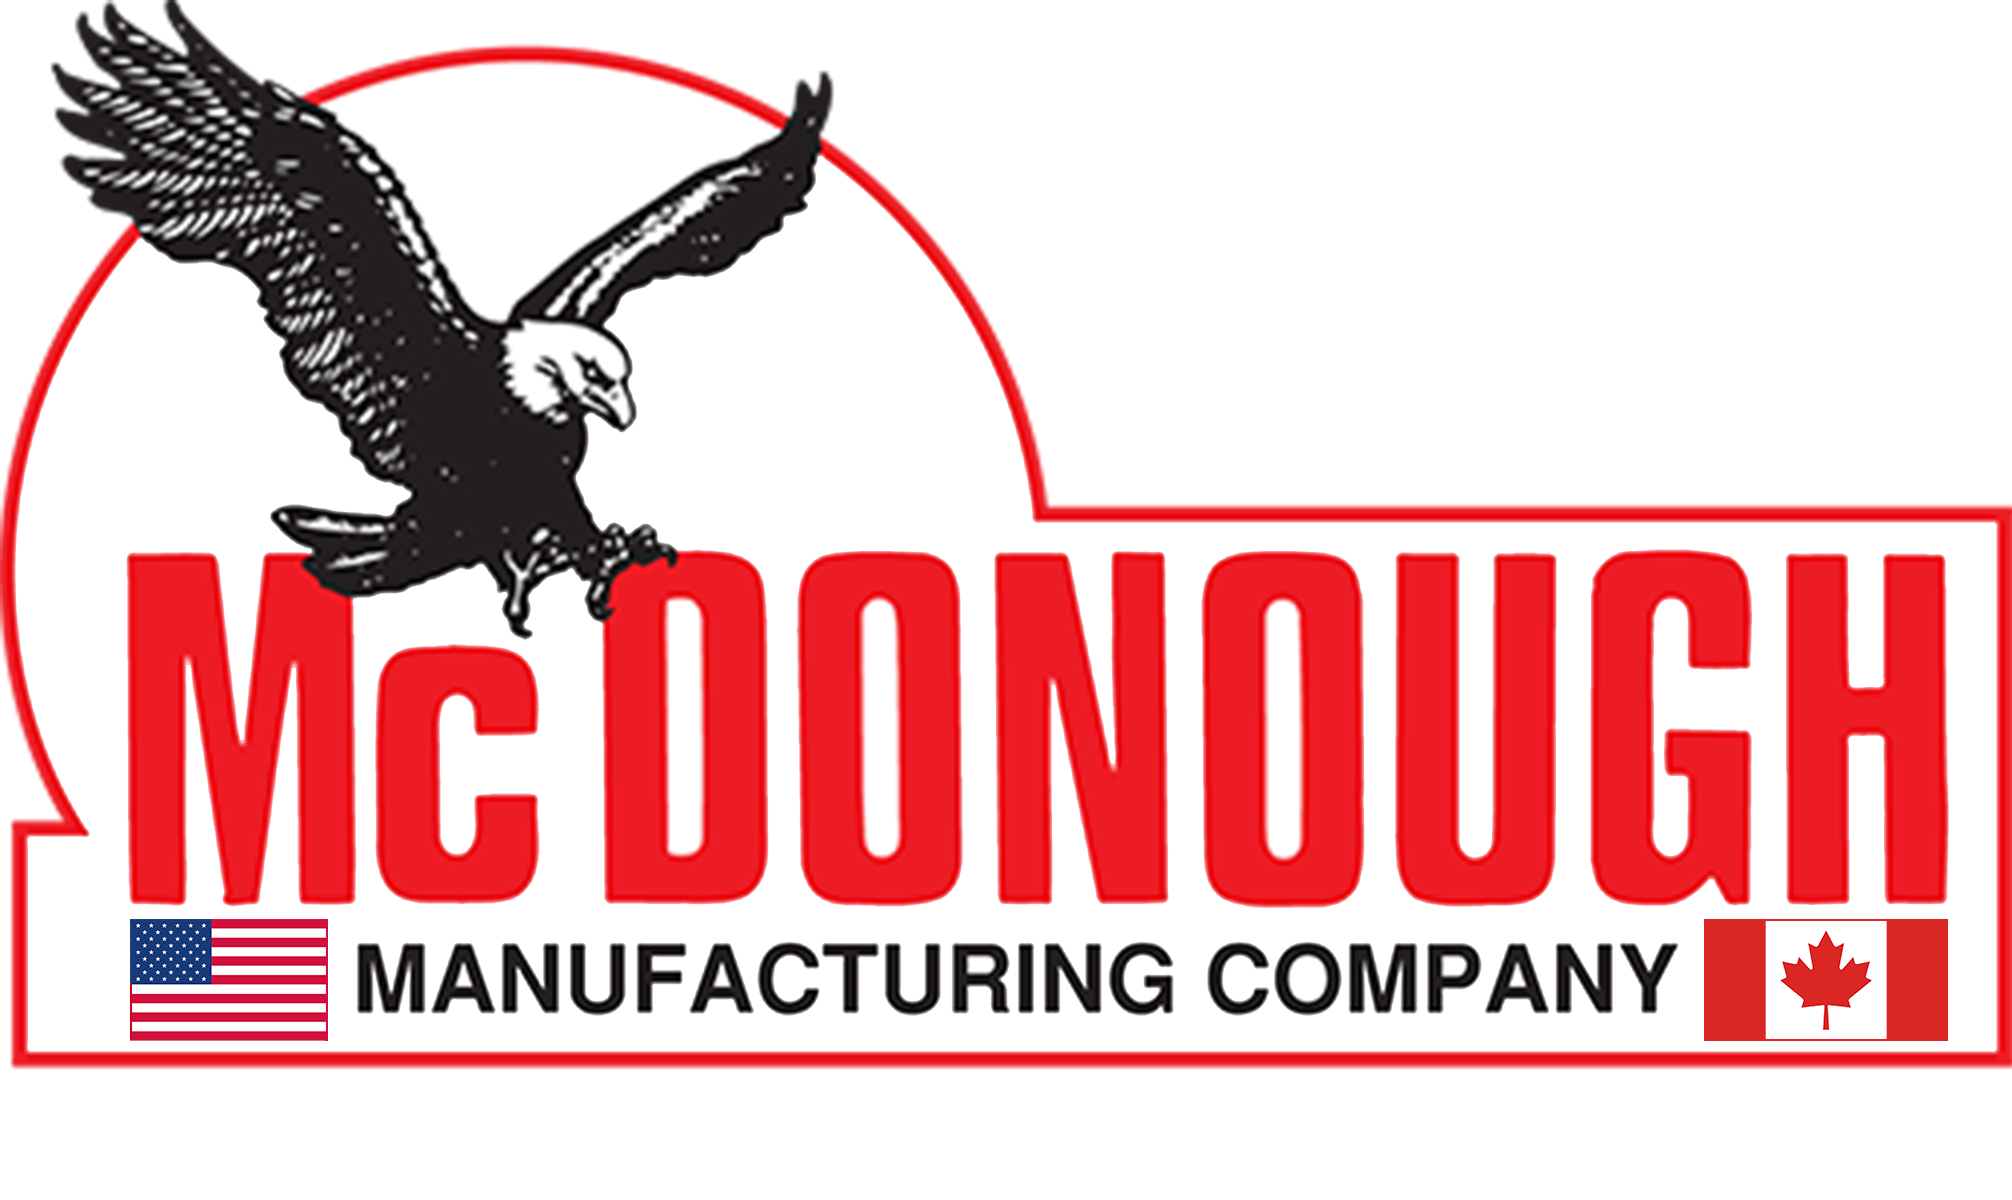 McDonough Manufacturing Company